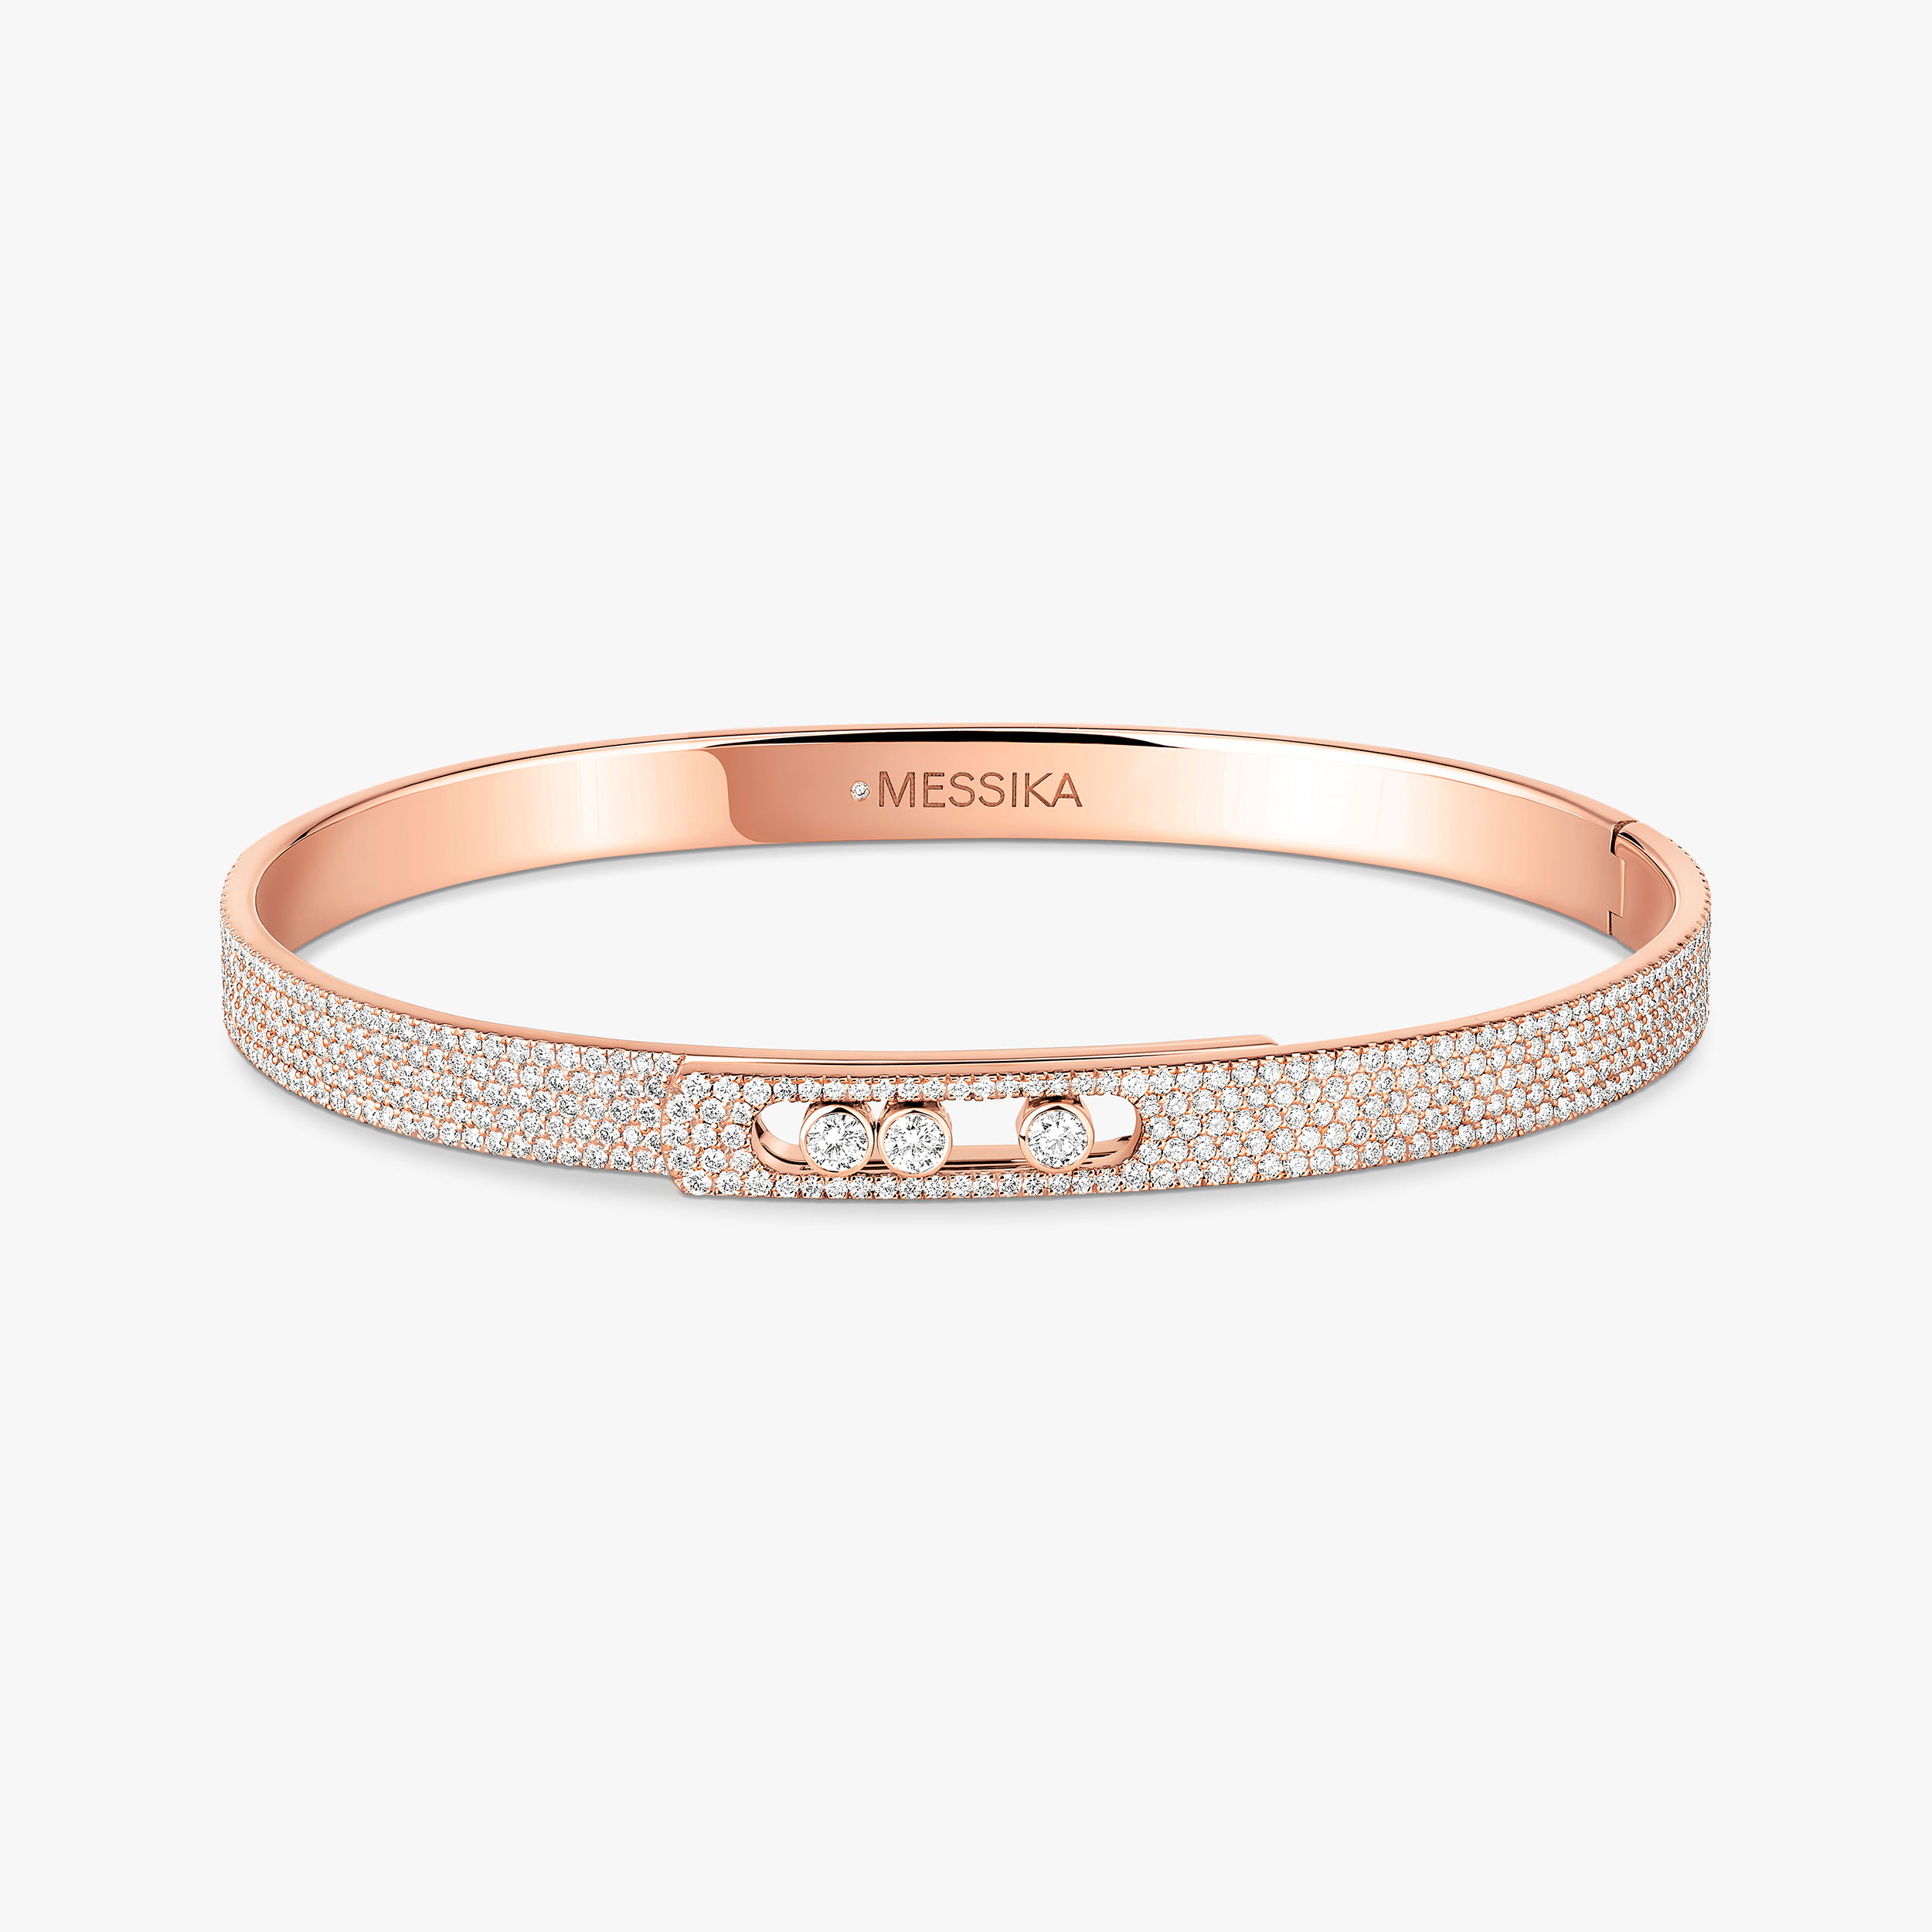 Move Noa PM Full Pavé Bangle Pink Gold For Her Diamond Bracelet 12721-PG